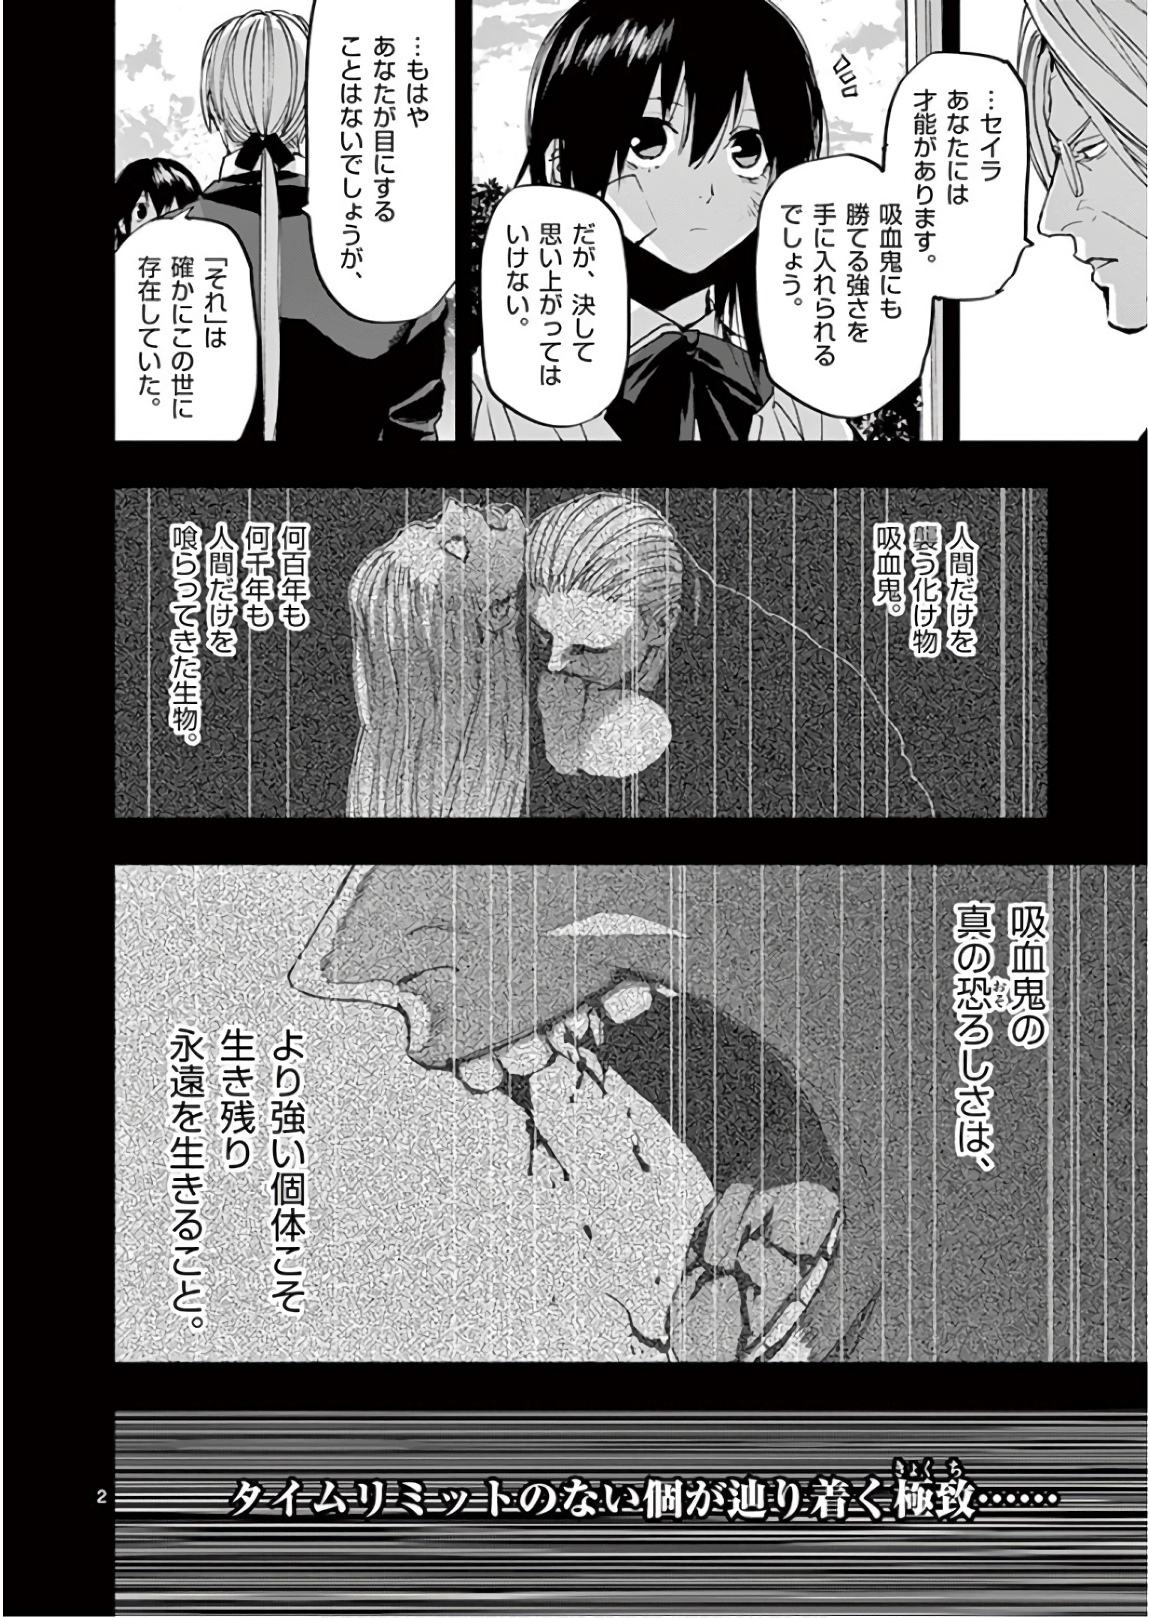 Ginrou Bloodborne - Chapter 95 - Page 2